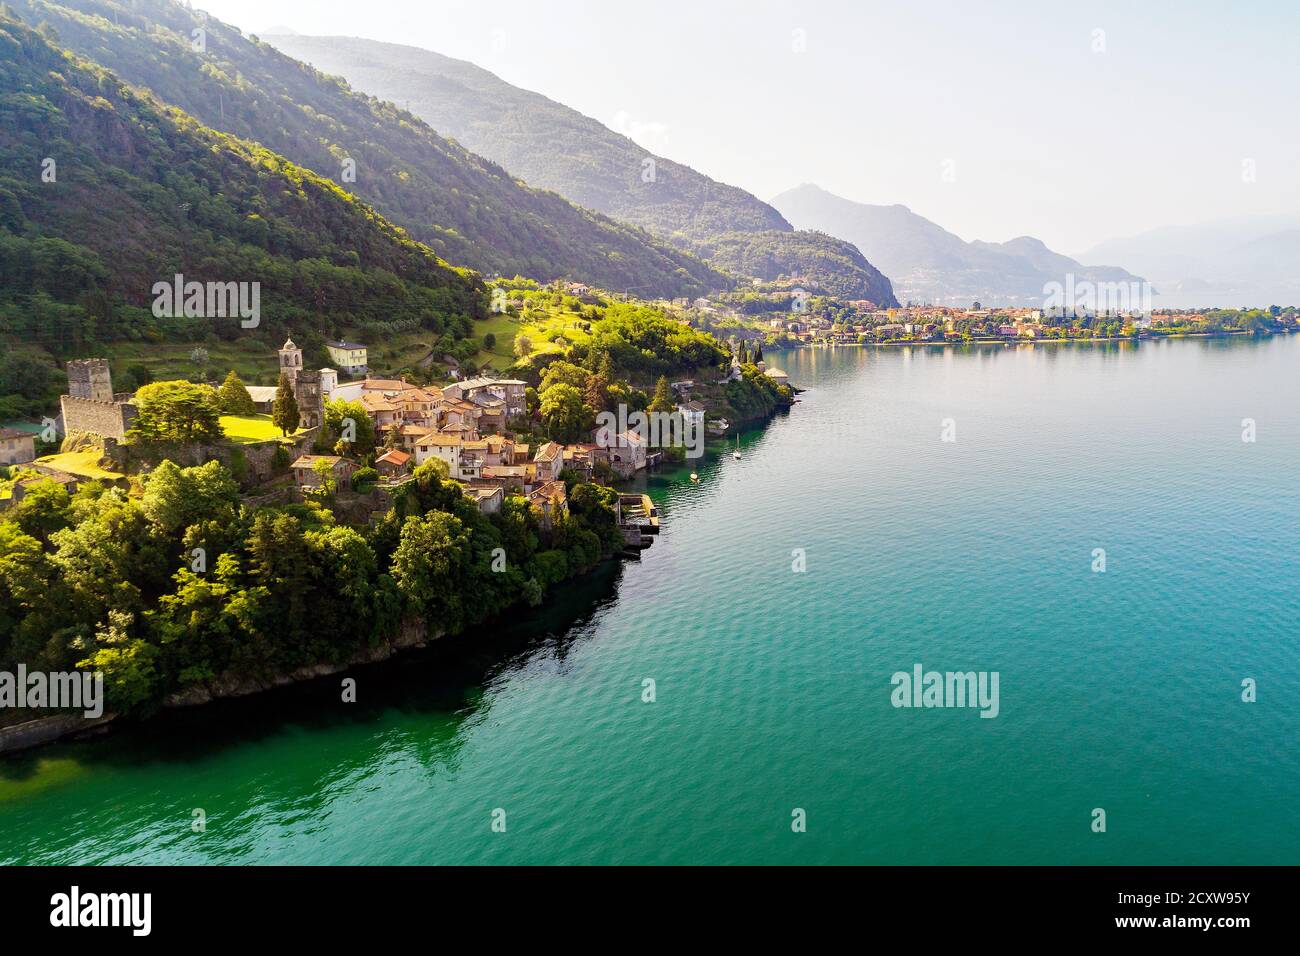 Corenno Plinio - Lake Como (IT) - Aerial view of the village Stock Photo